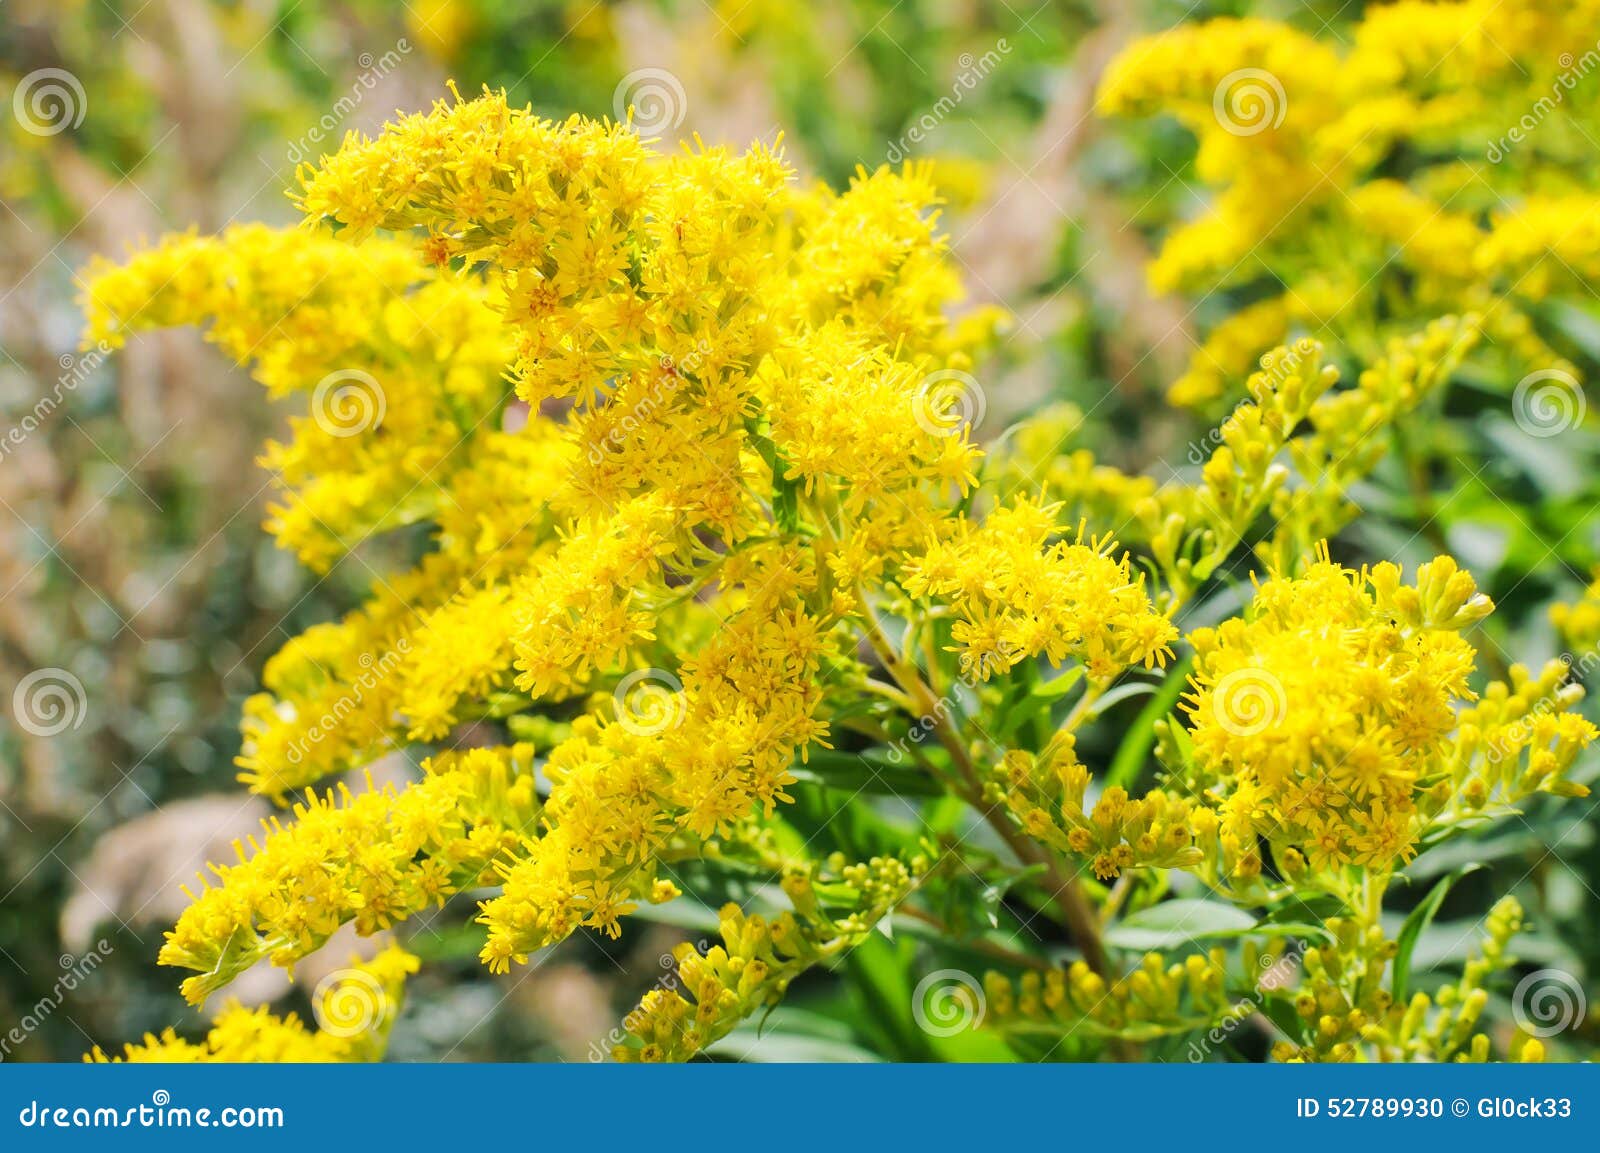 blooming goldenrod, solidago flower